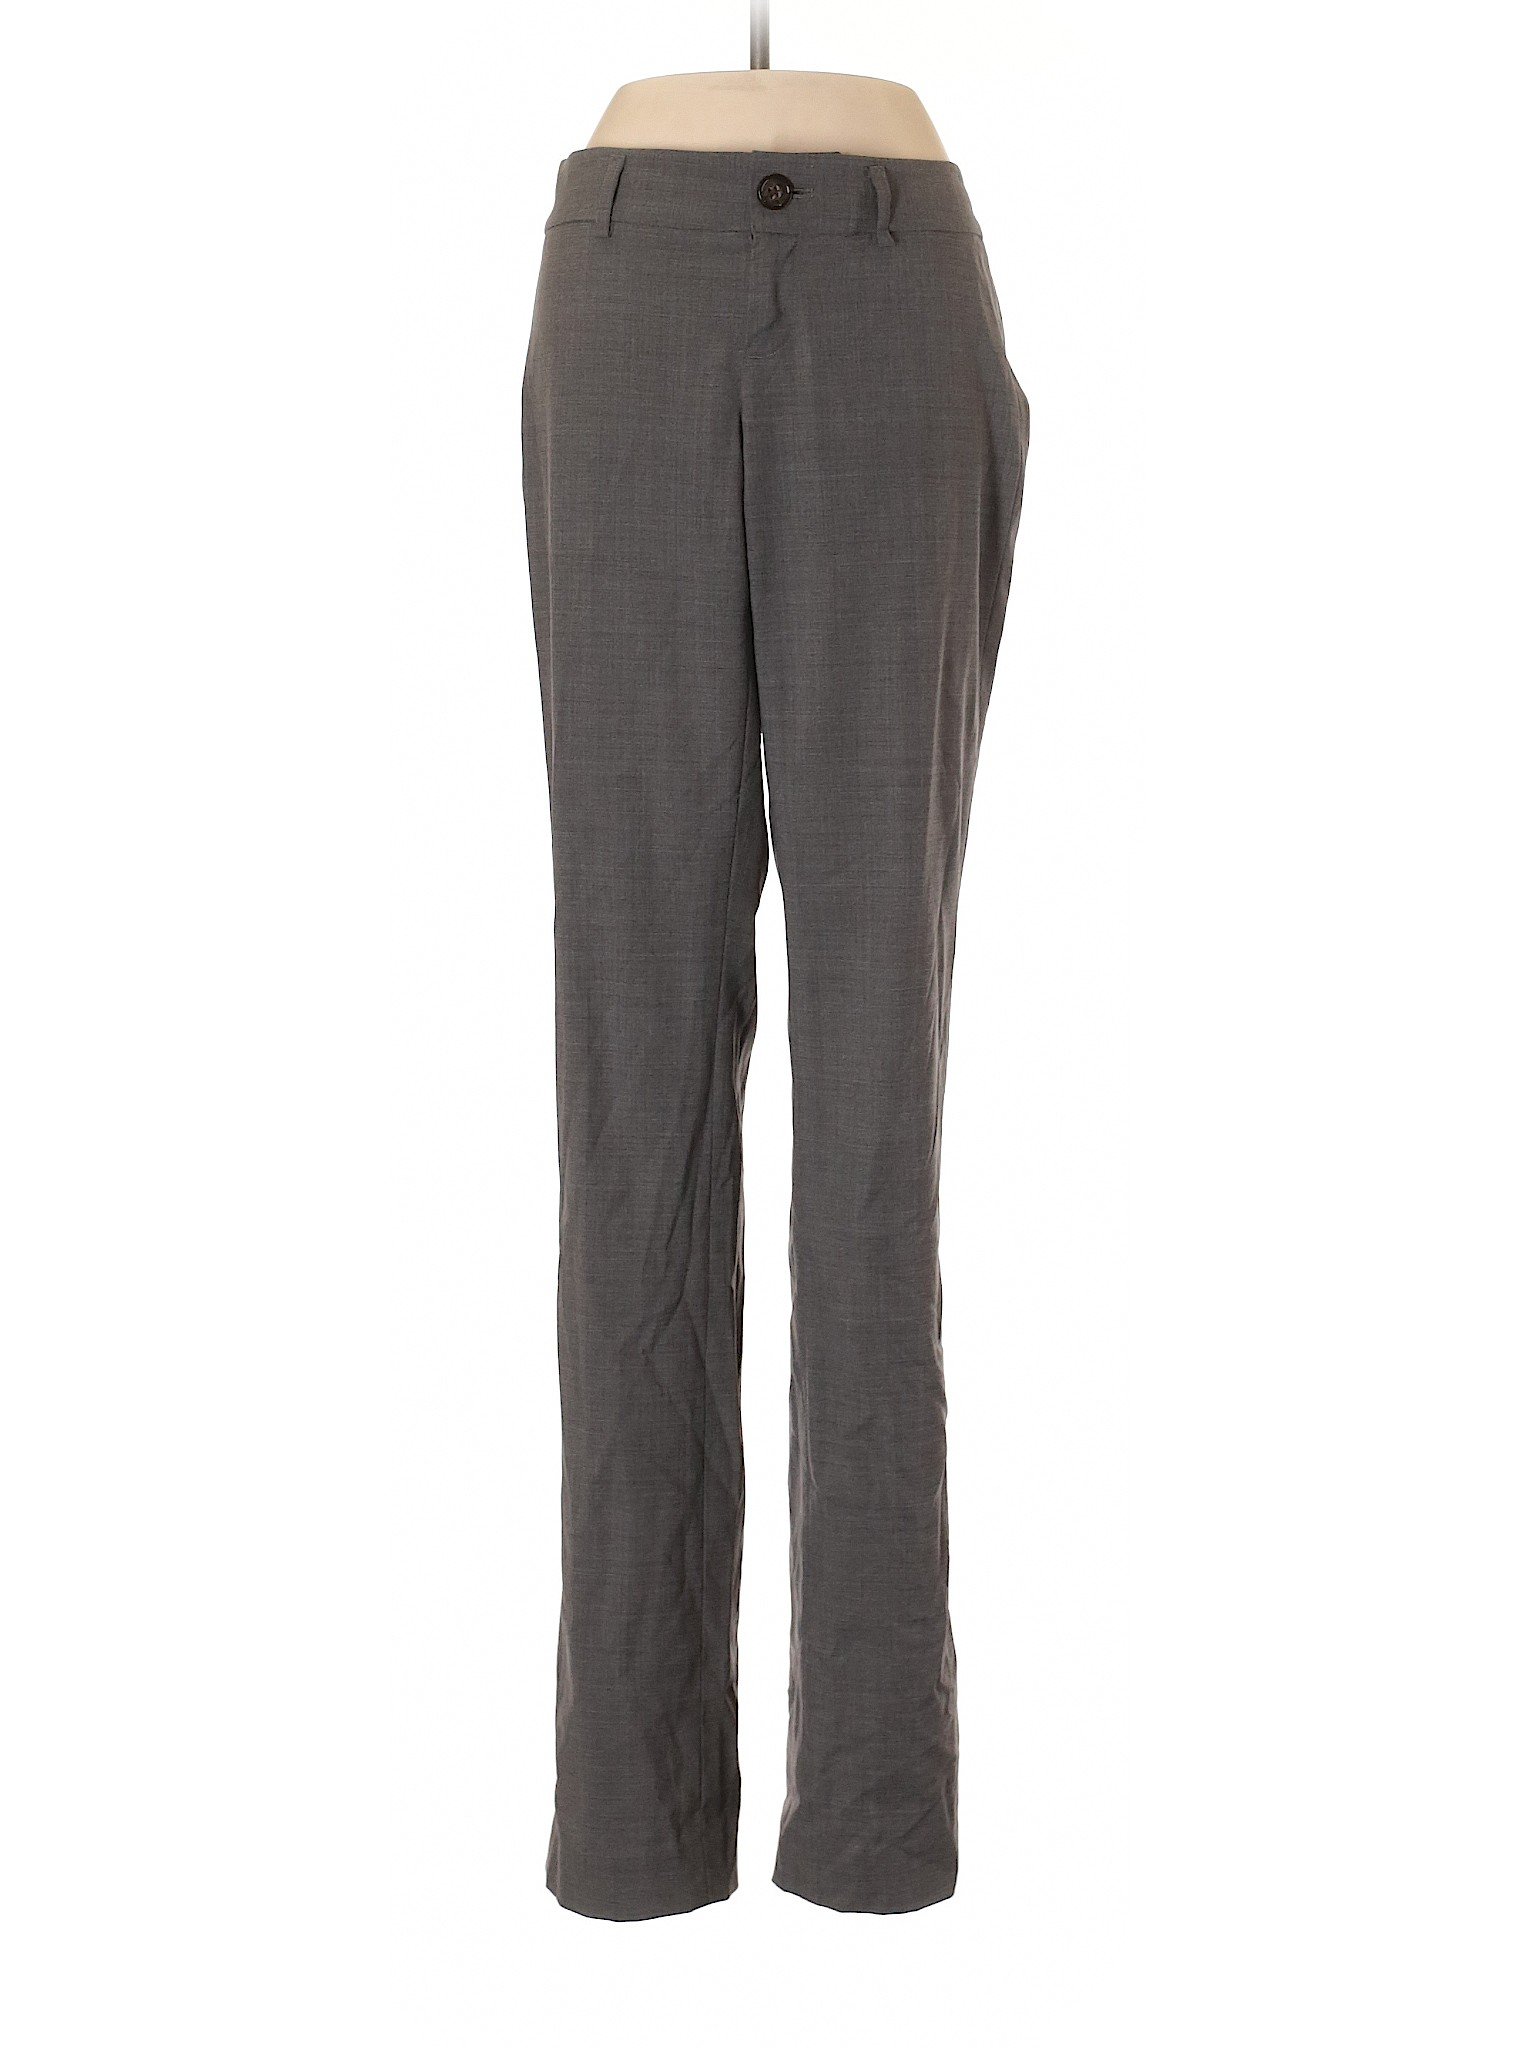 Banana Republic Women Gray Wool Pants 00 | eBay